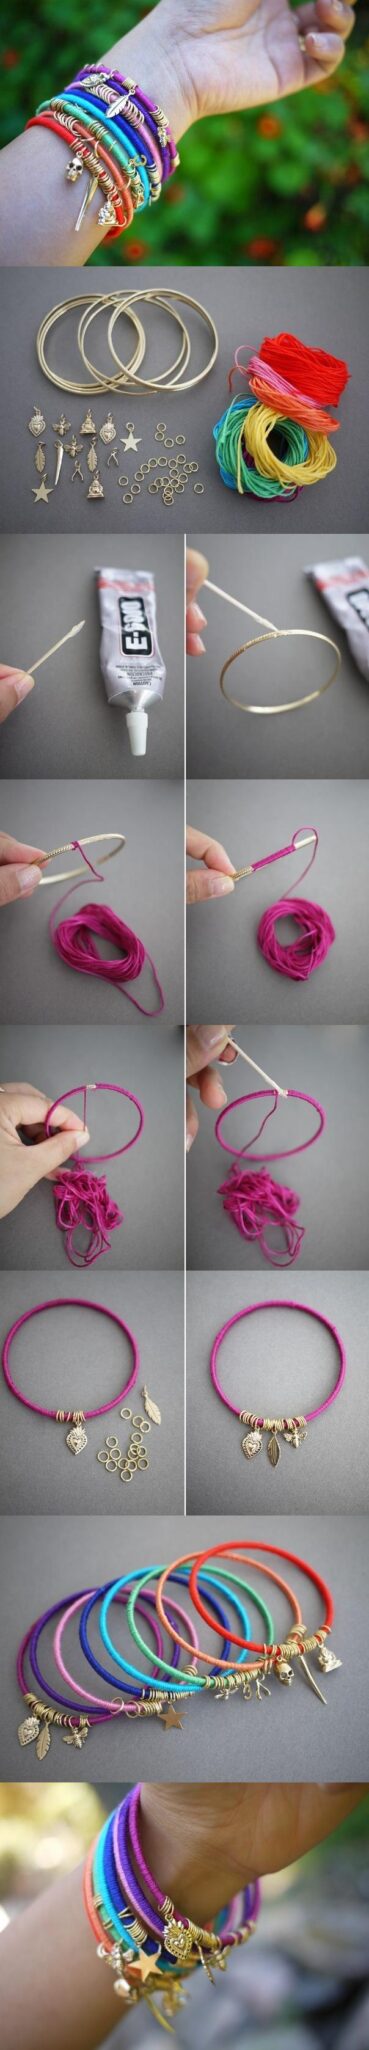 Easy DIY Bracelet